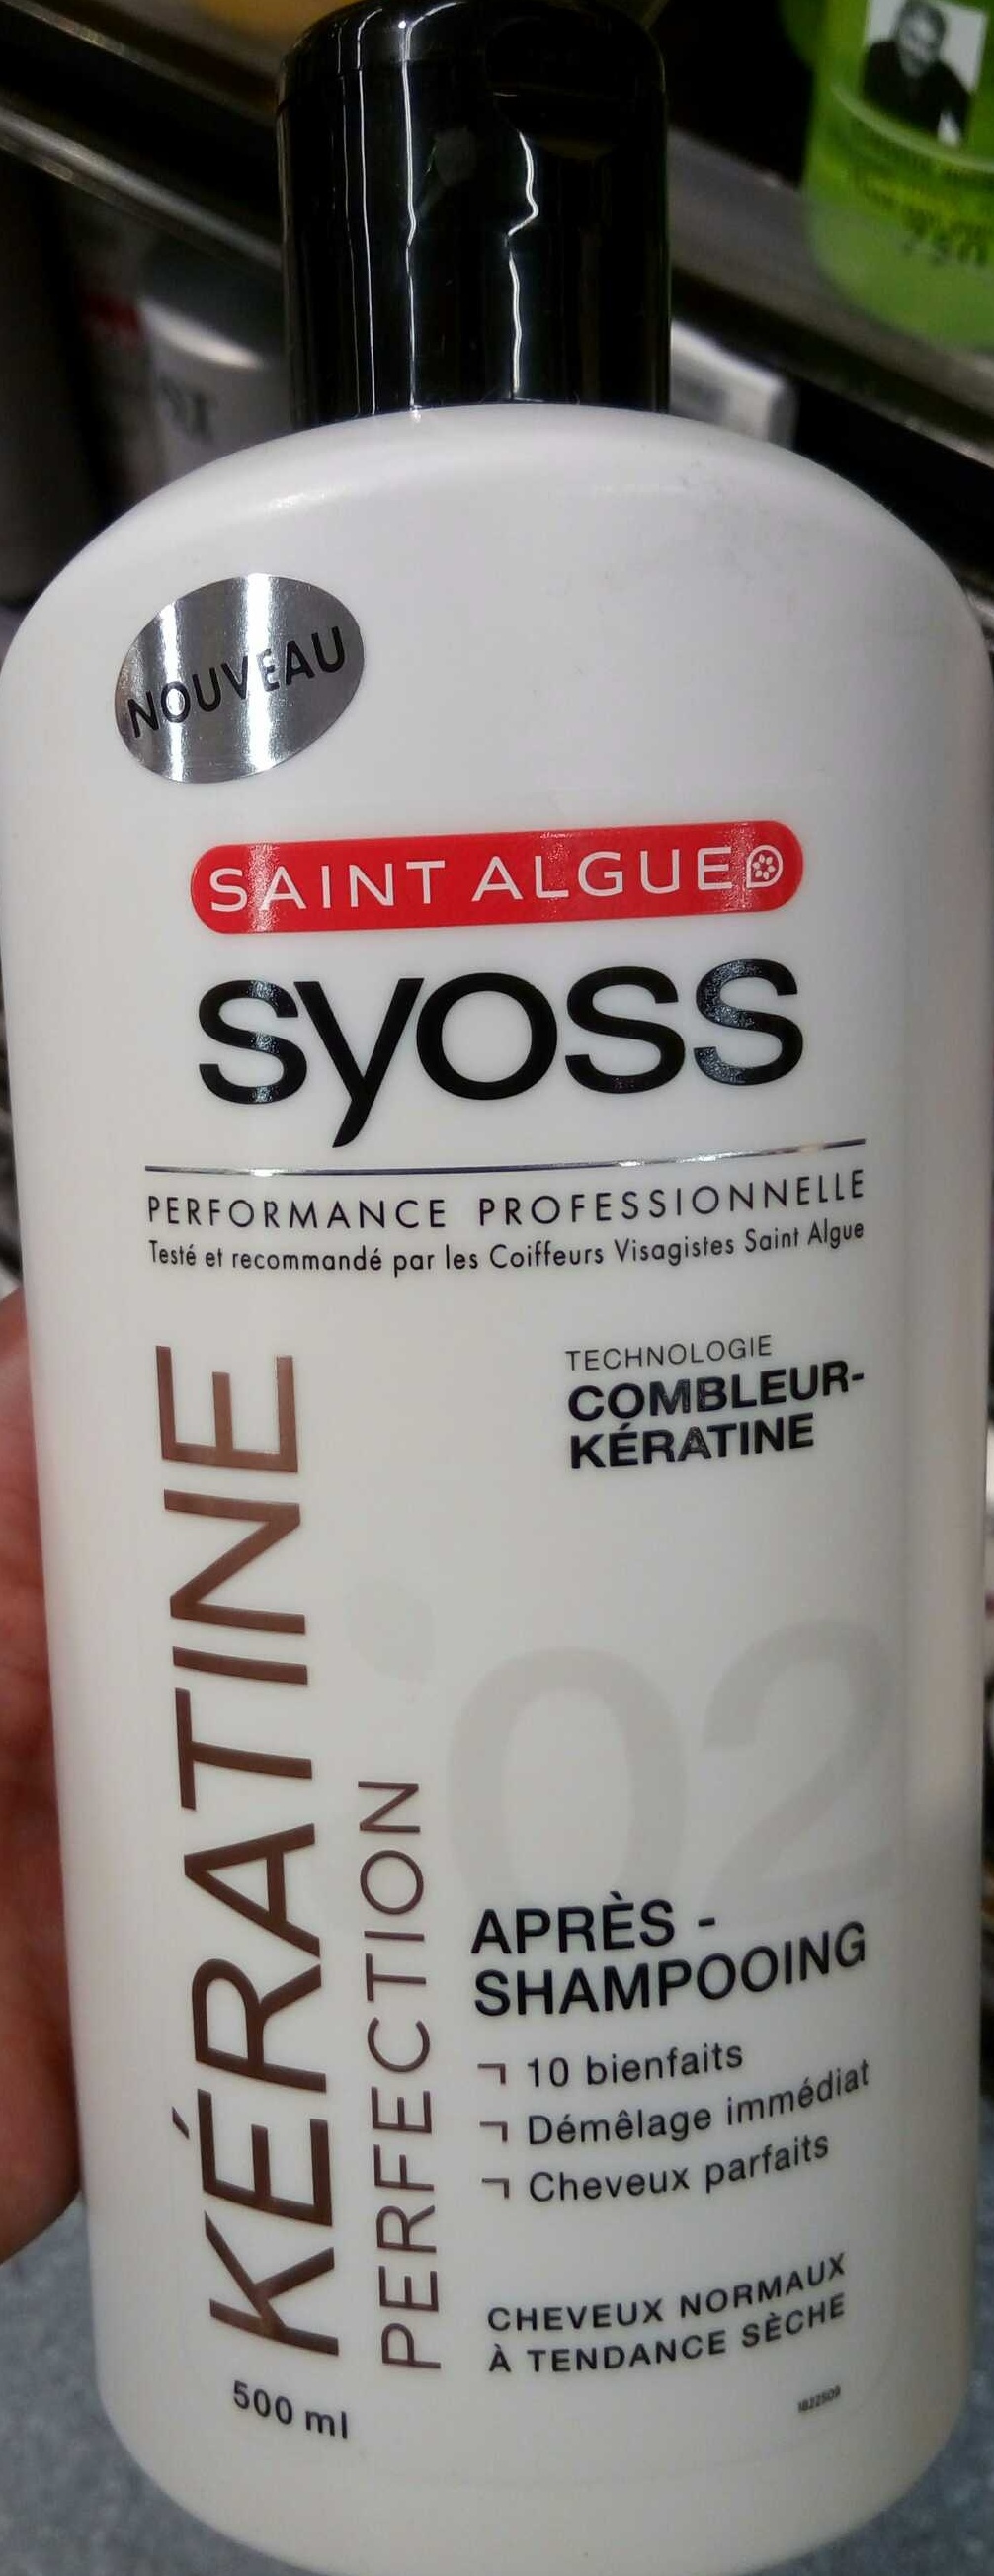 Syoss Kératine Perfection Après-Shampooing - Product - fr